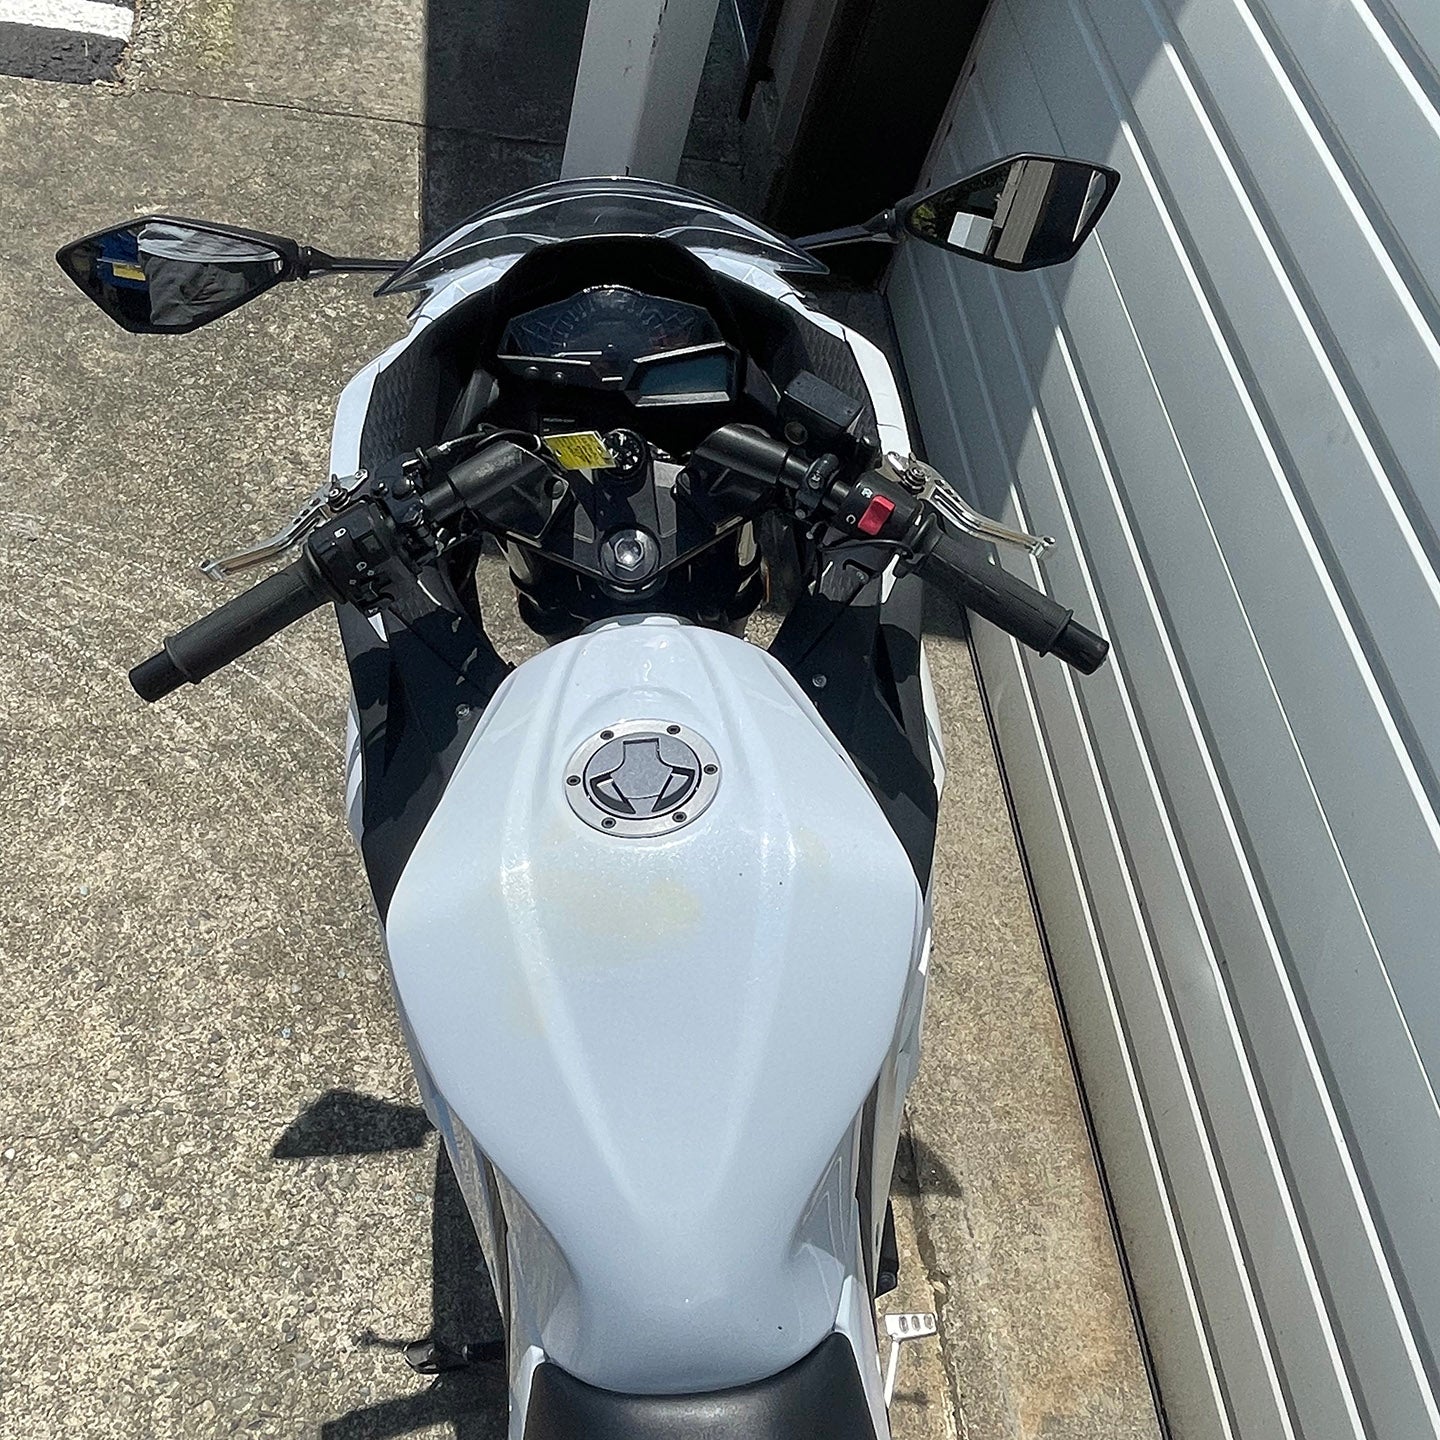 2015 Kawasaki Ninja 300 (21,153 Miles)